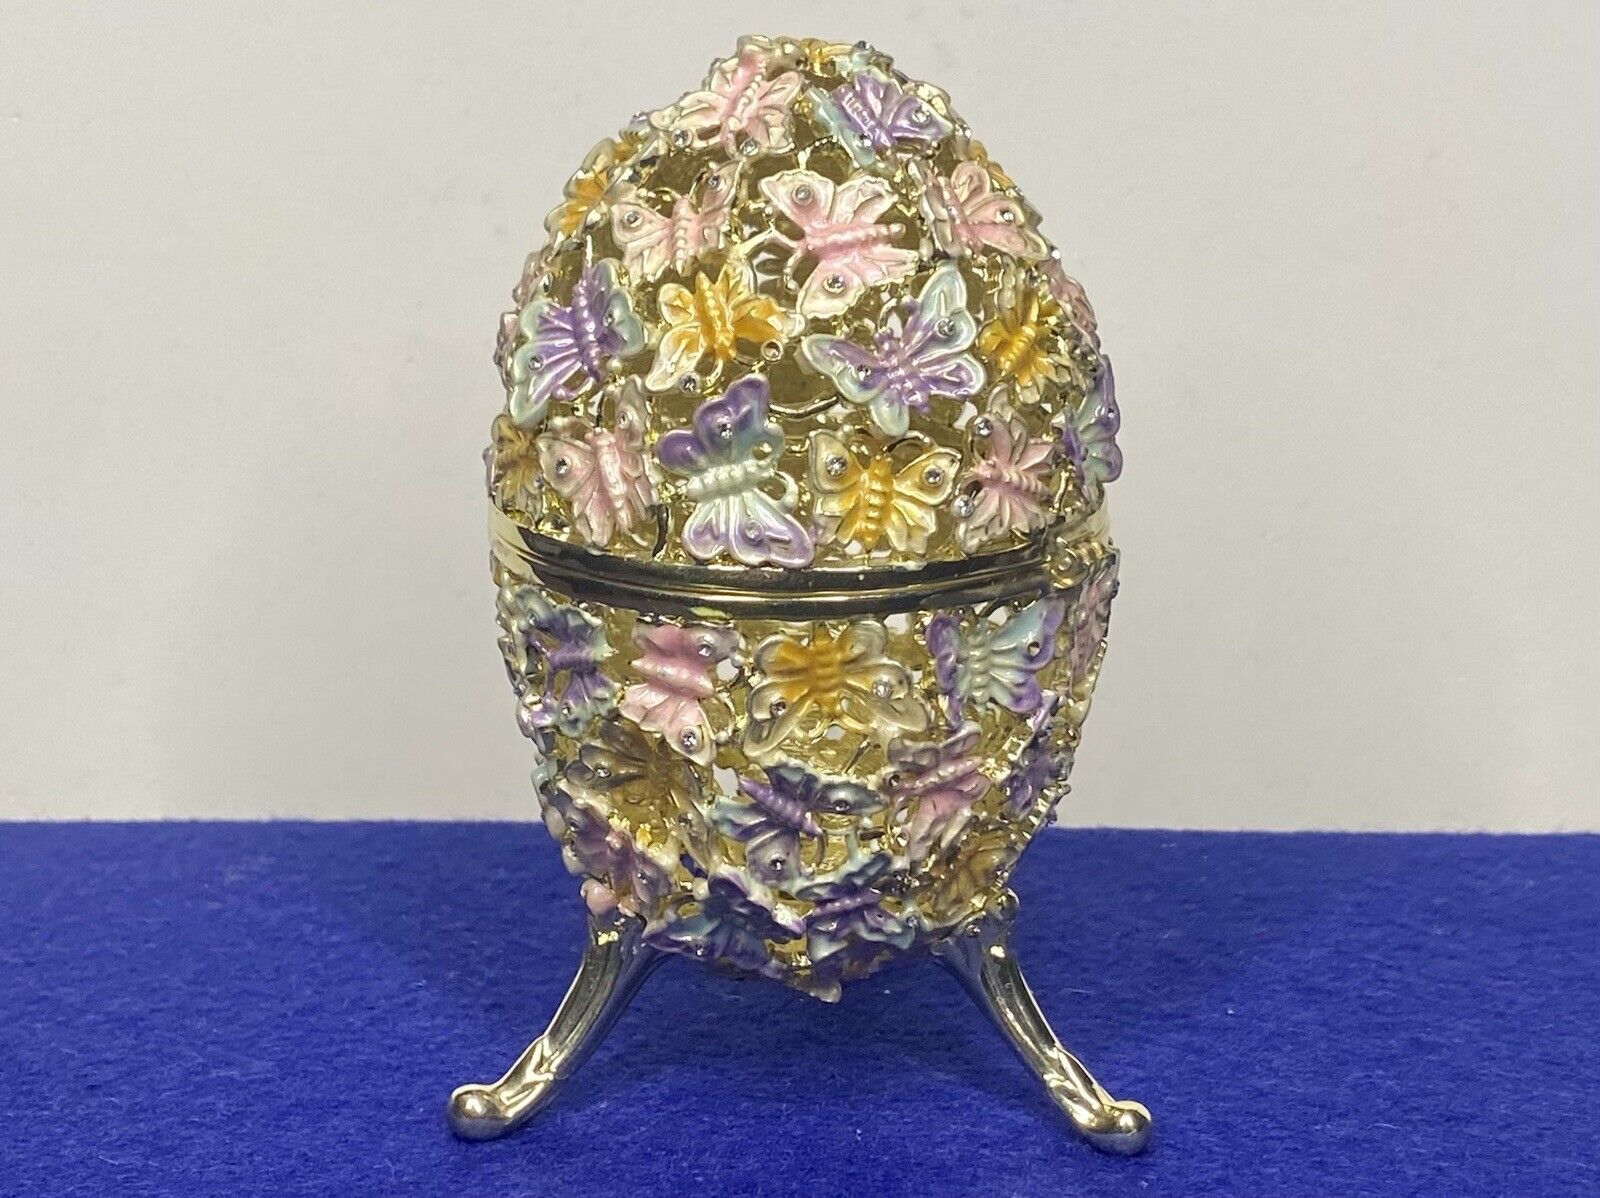 Keren Kopal Golden 24k Floral Faberge Egg Decorated with Butterflies Trinket Box